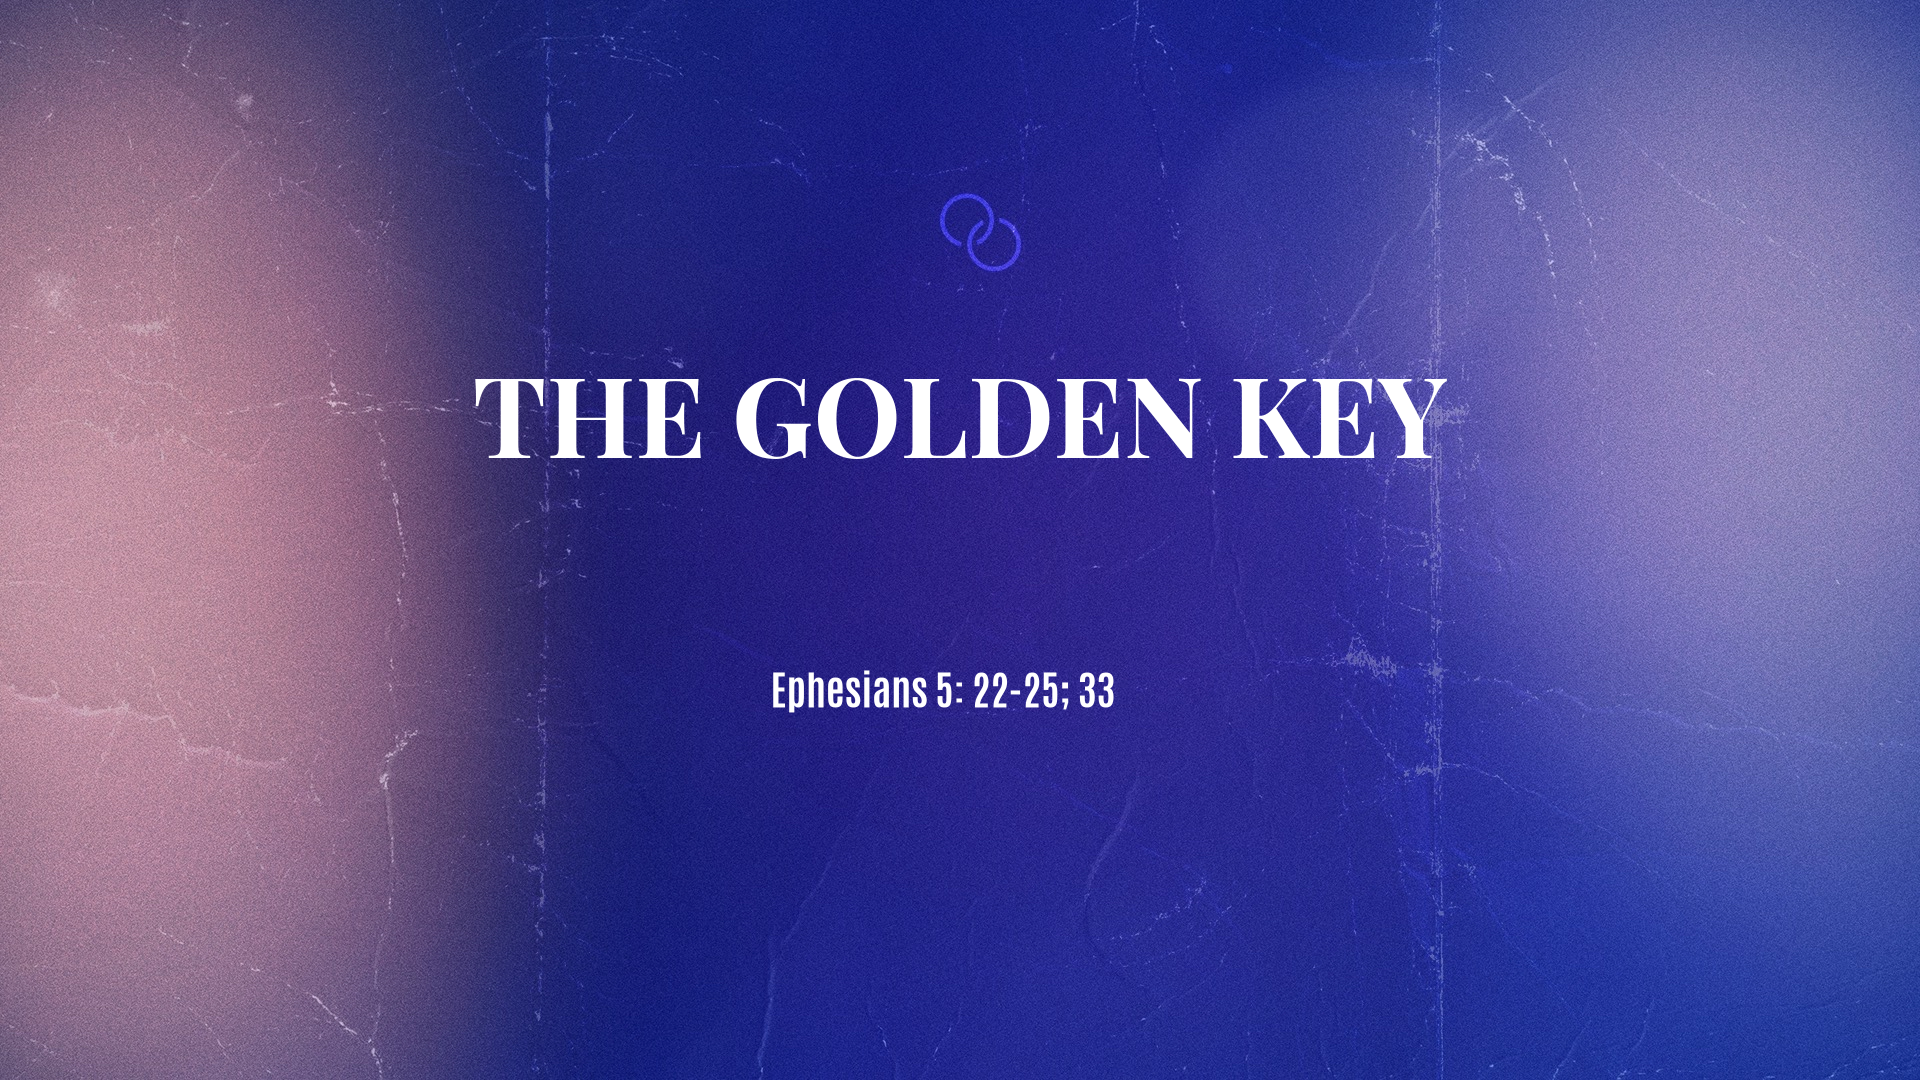 Sep 12, 2021 - The Golden Key (Video) - Ephesians 5: 22-25; 33